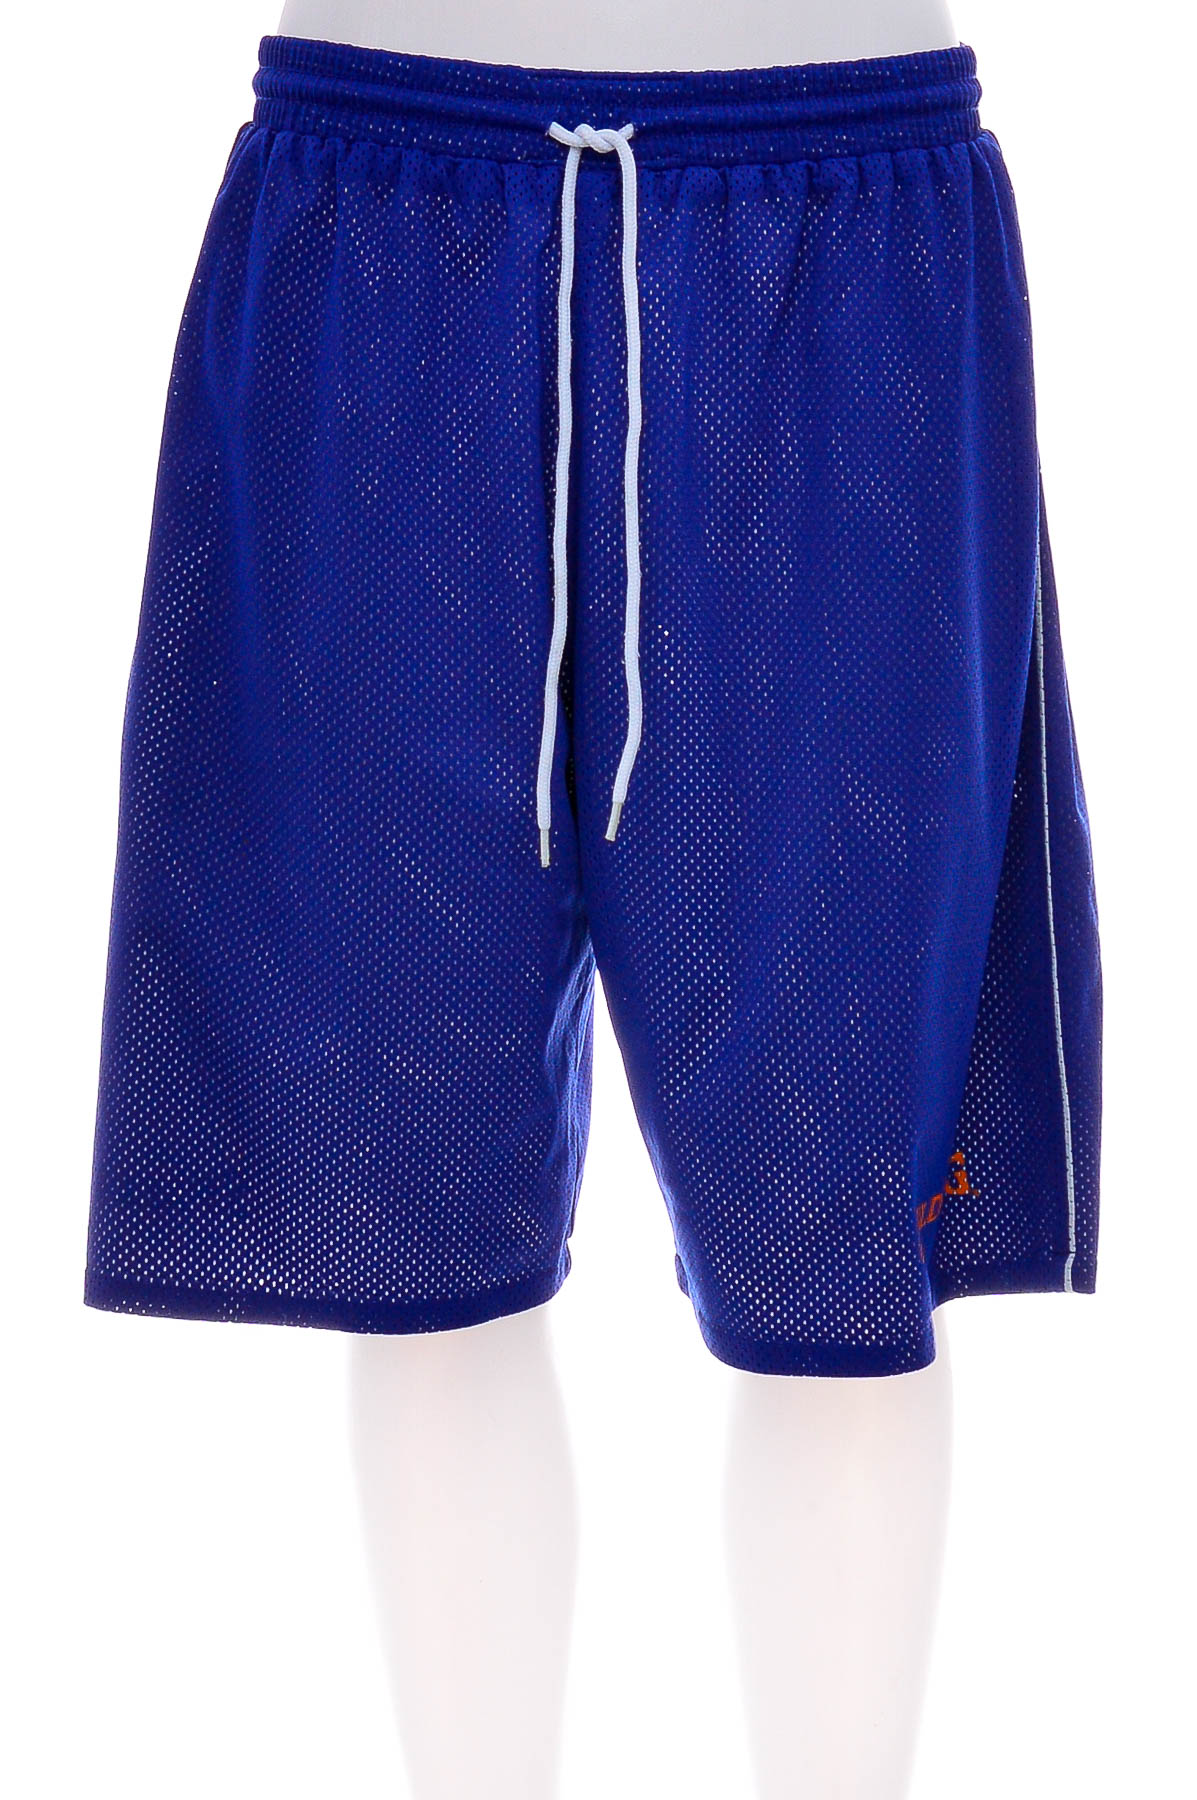 Men's shorts reversibleи - Spalding - 0